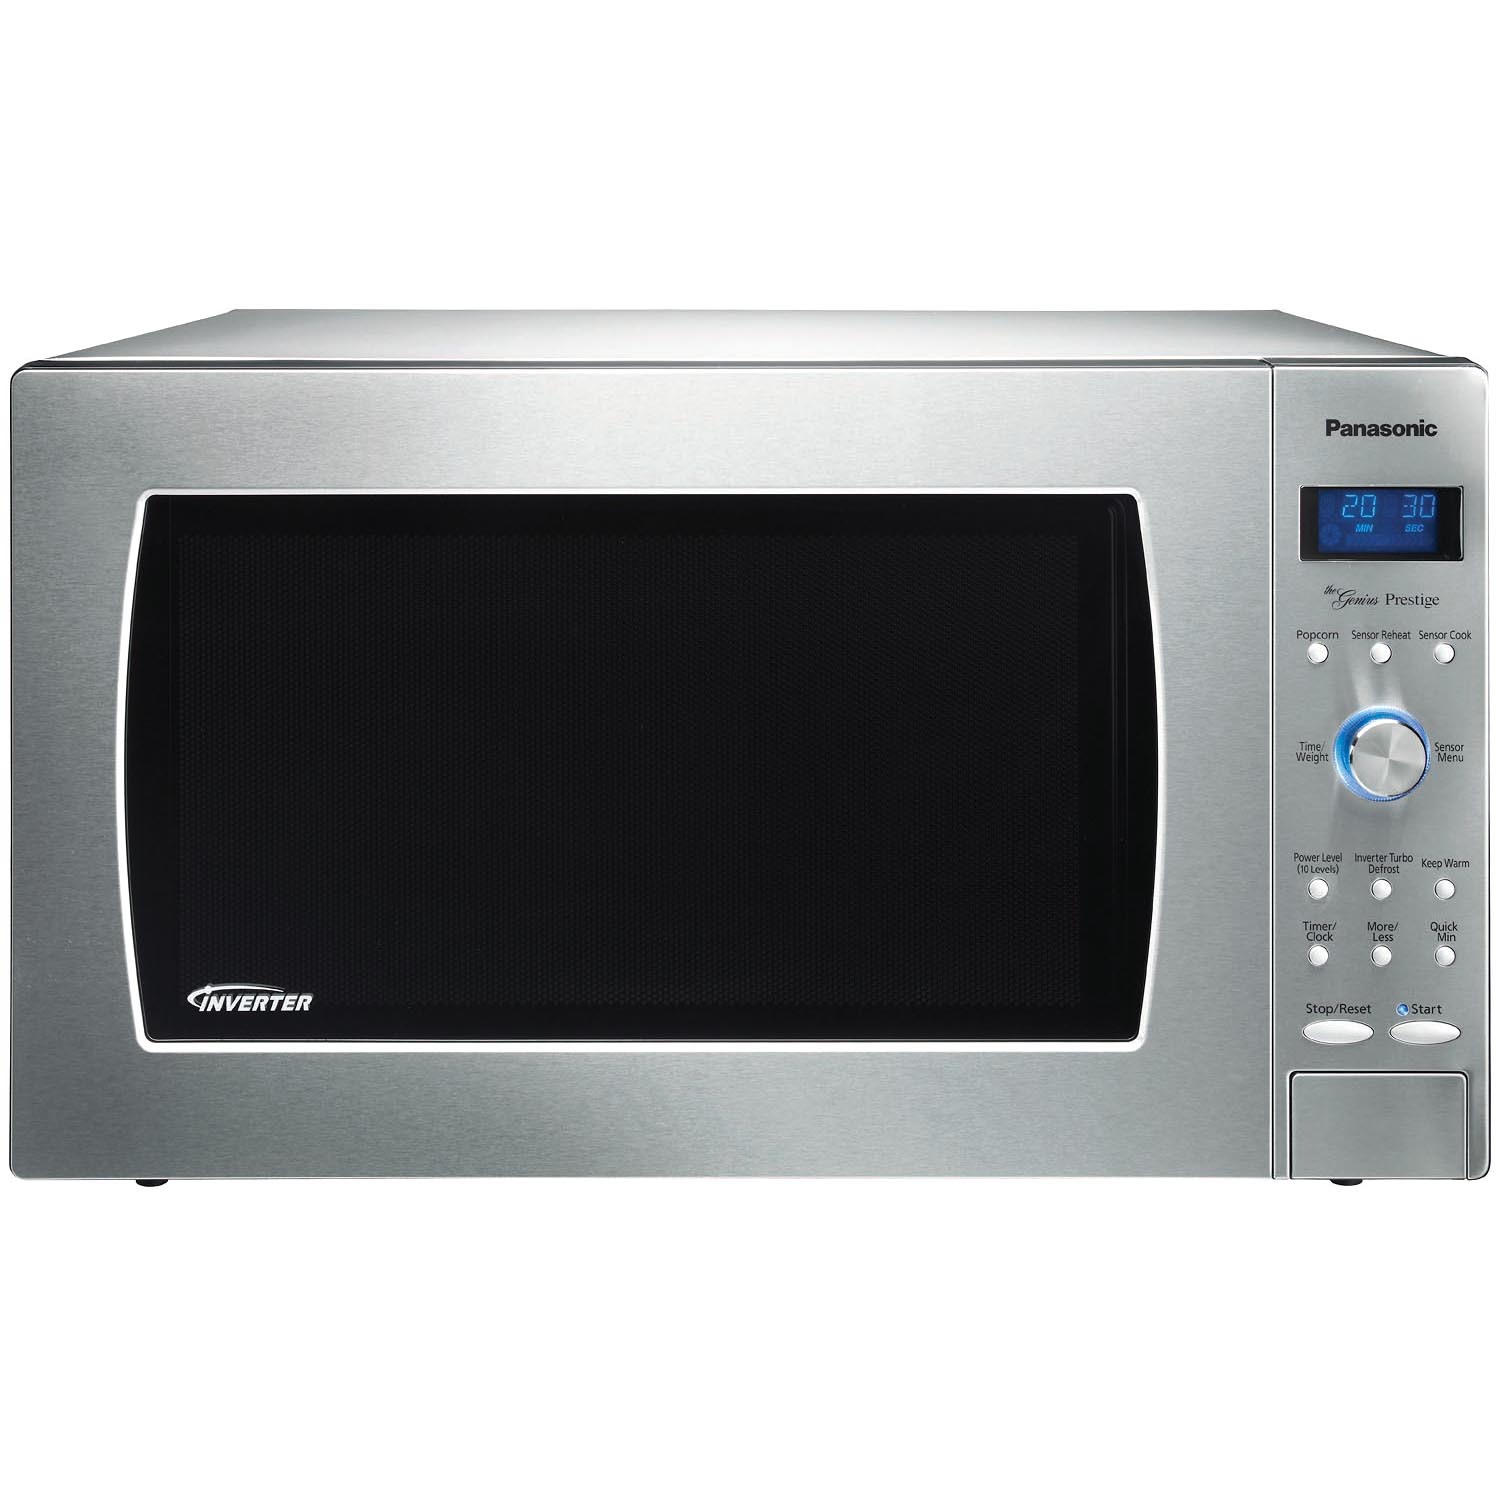 Best Buy: Panasonic Genius Prestige NNSD997S Inverter Microwave Oven